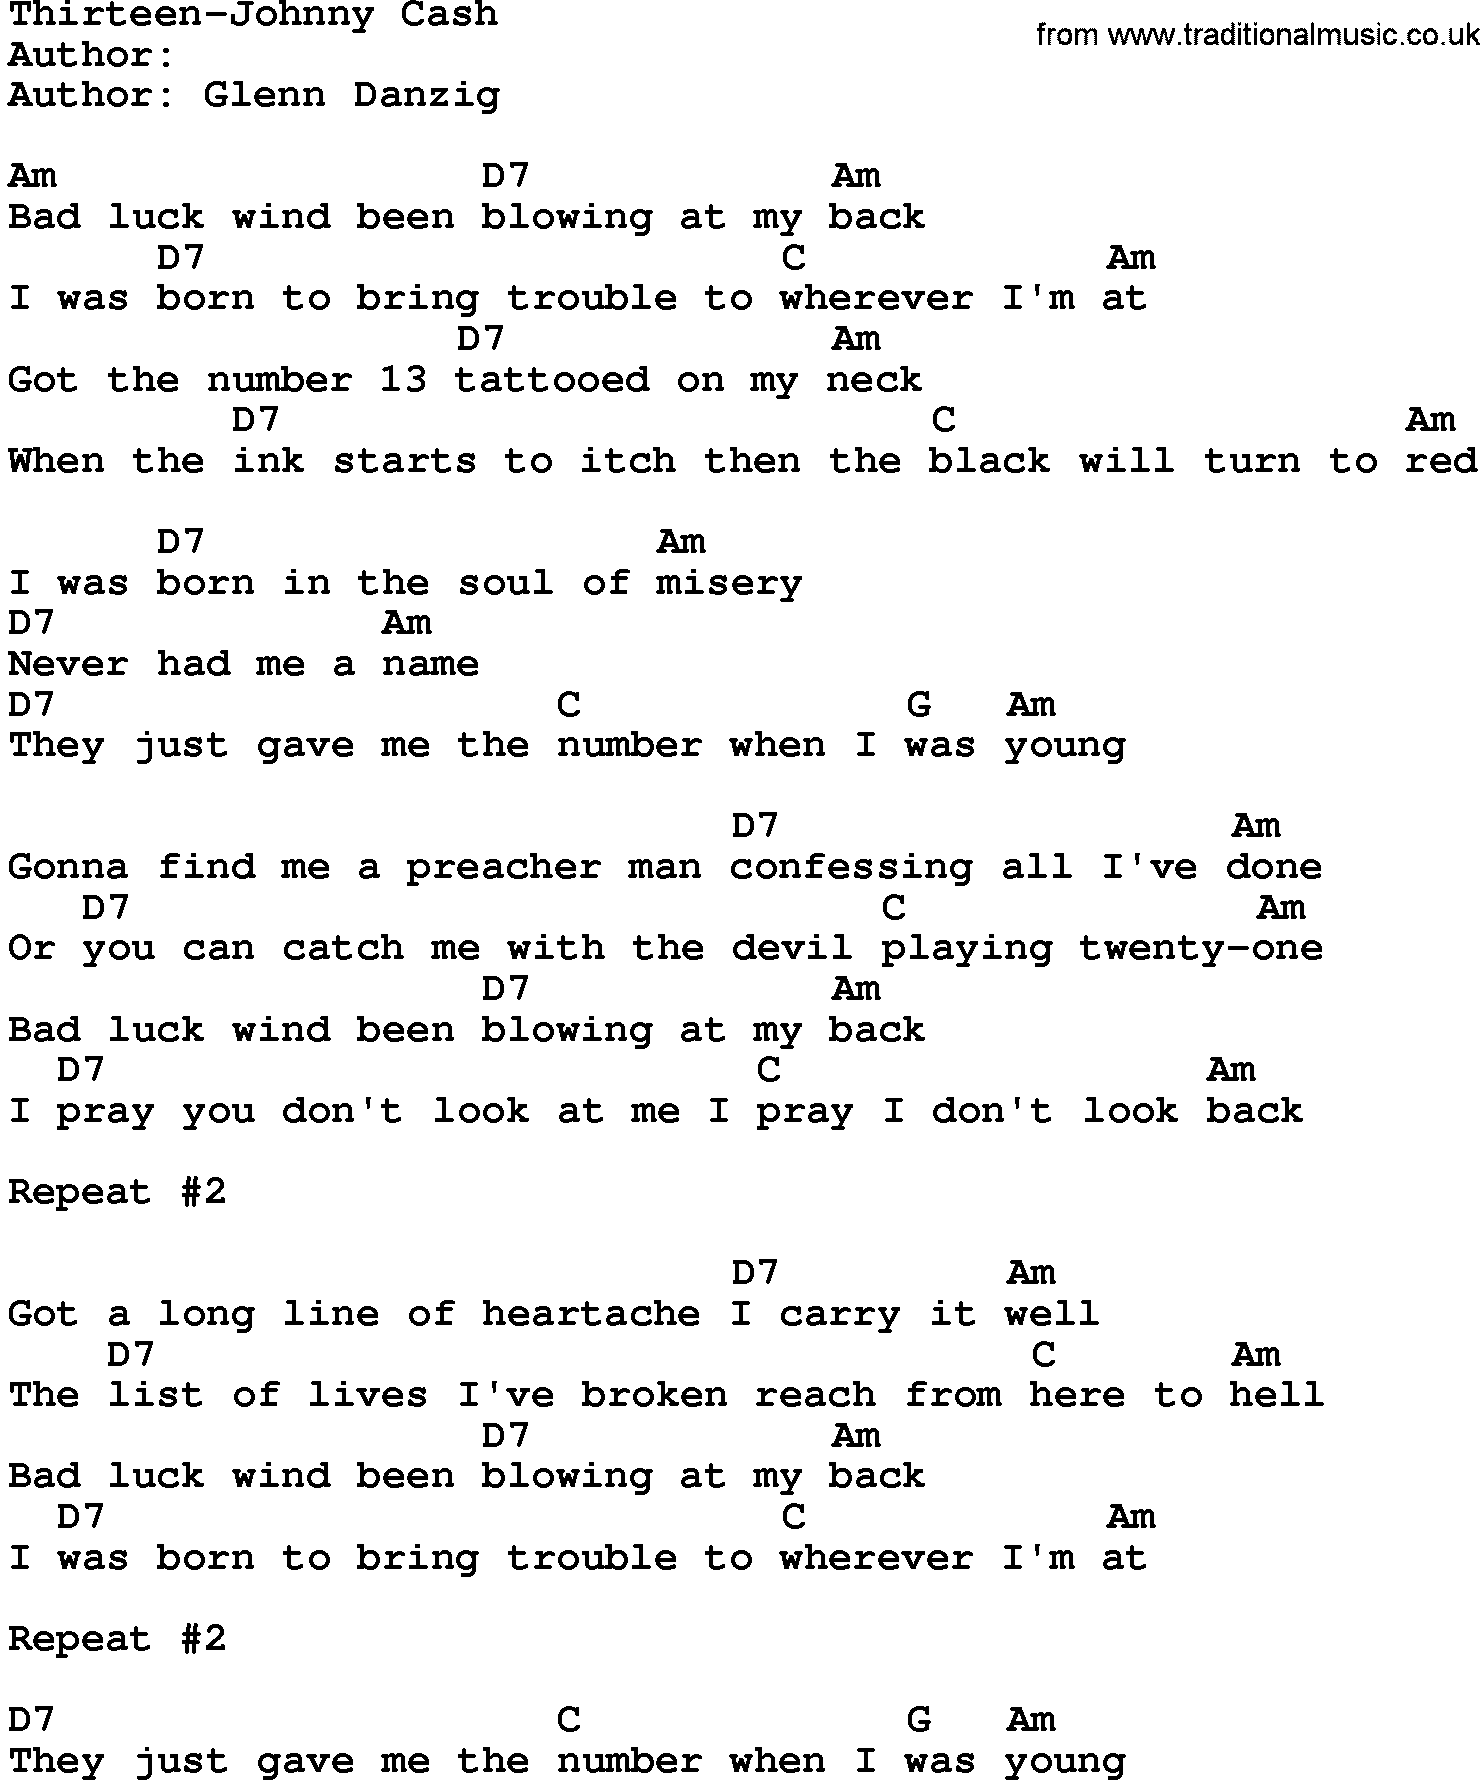 Country music song: Thirteen-Johnny Cash lyrics and chords